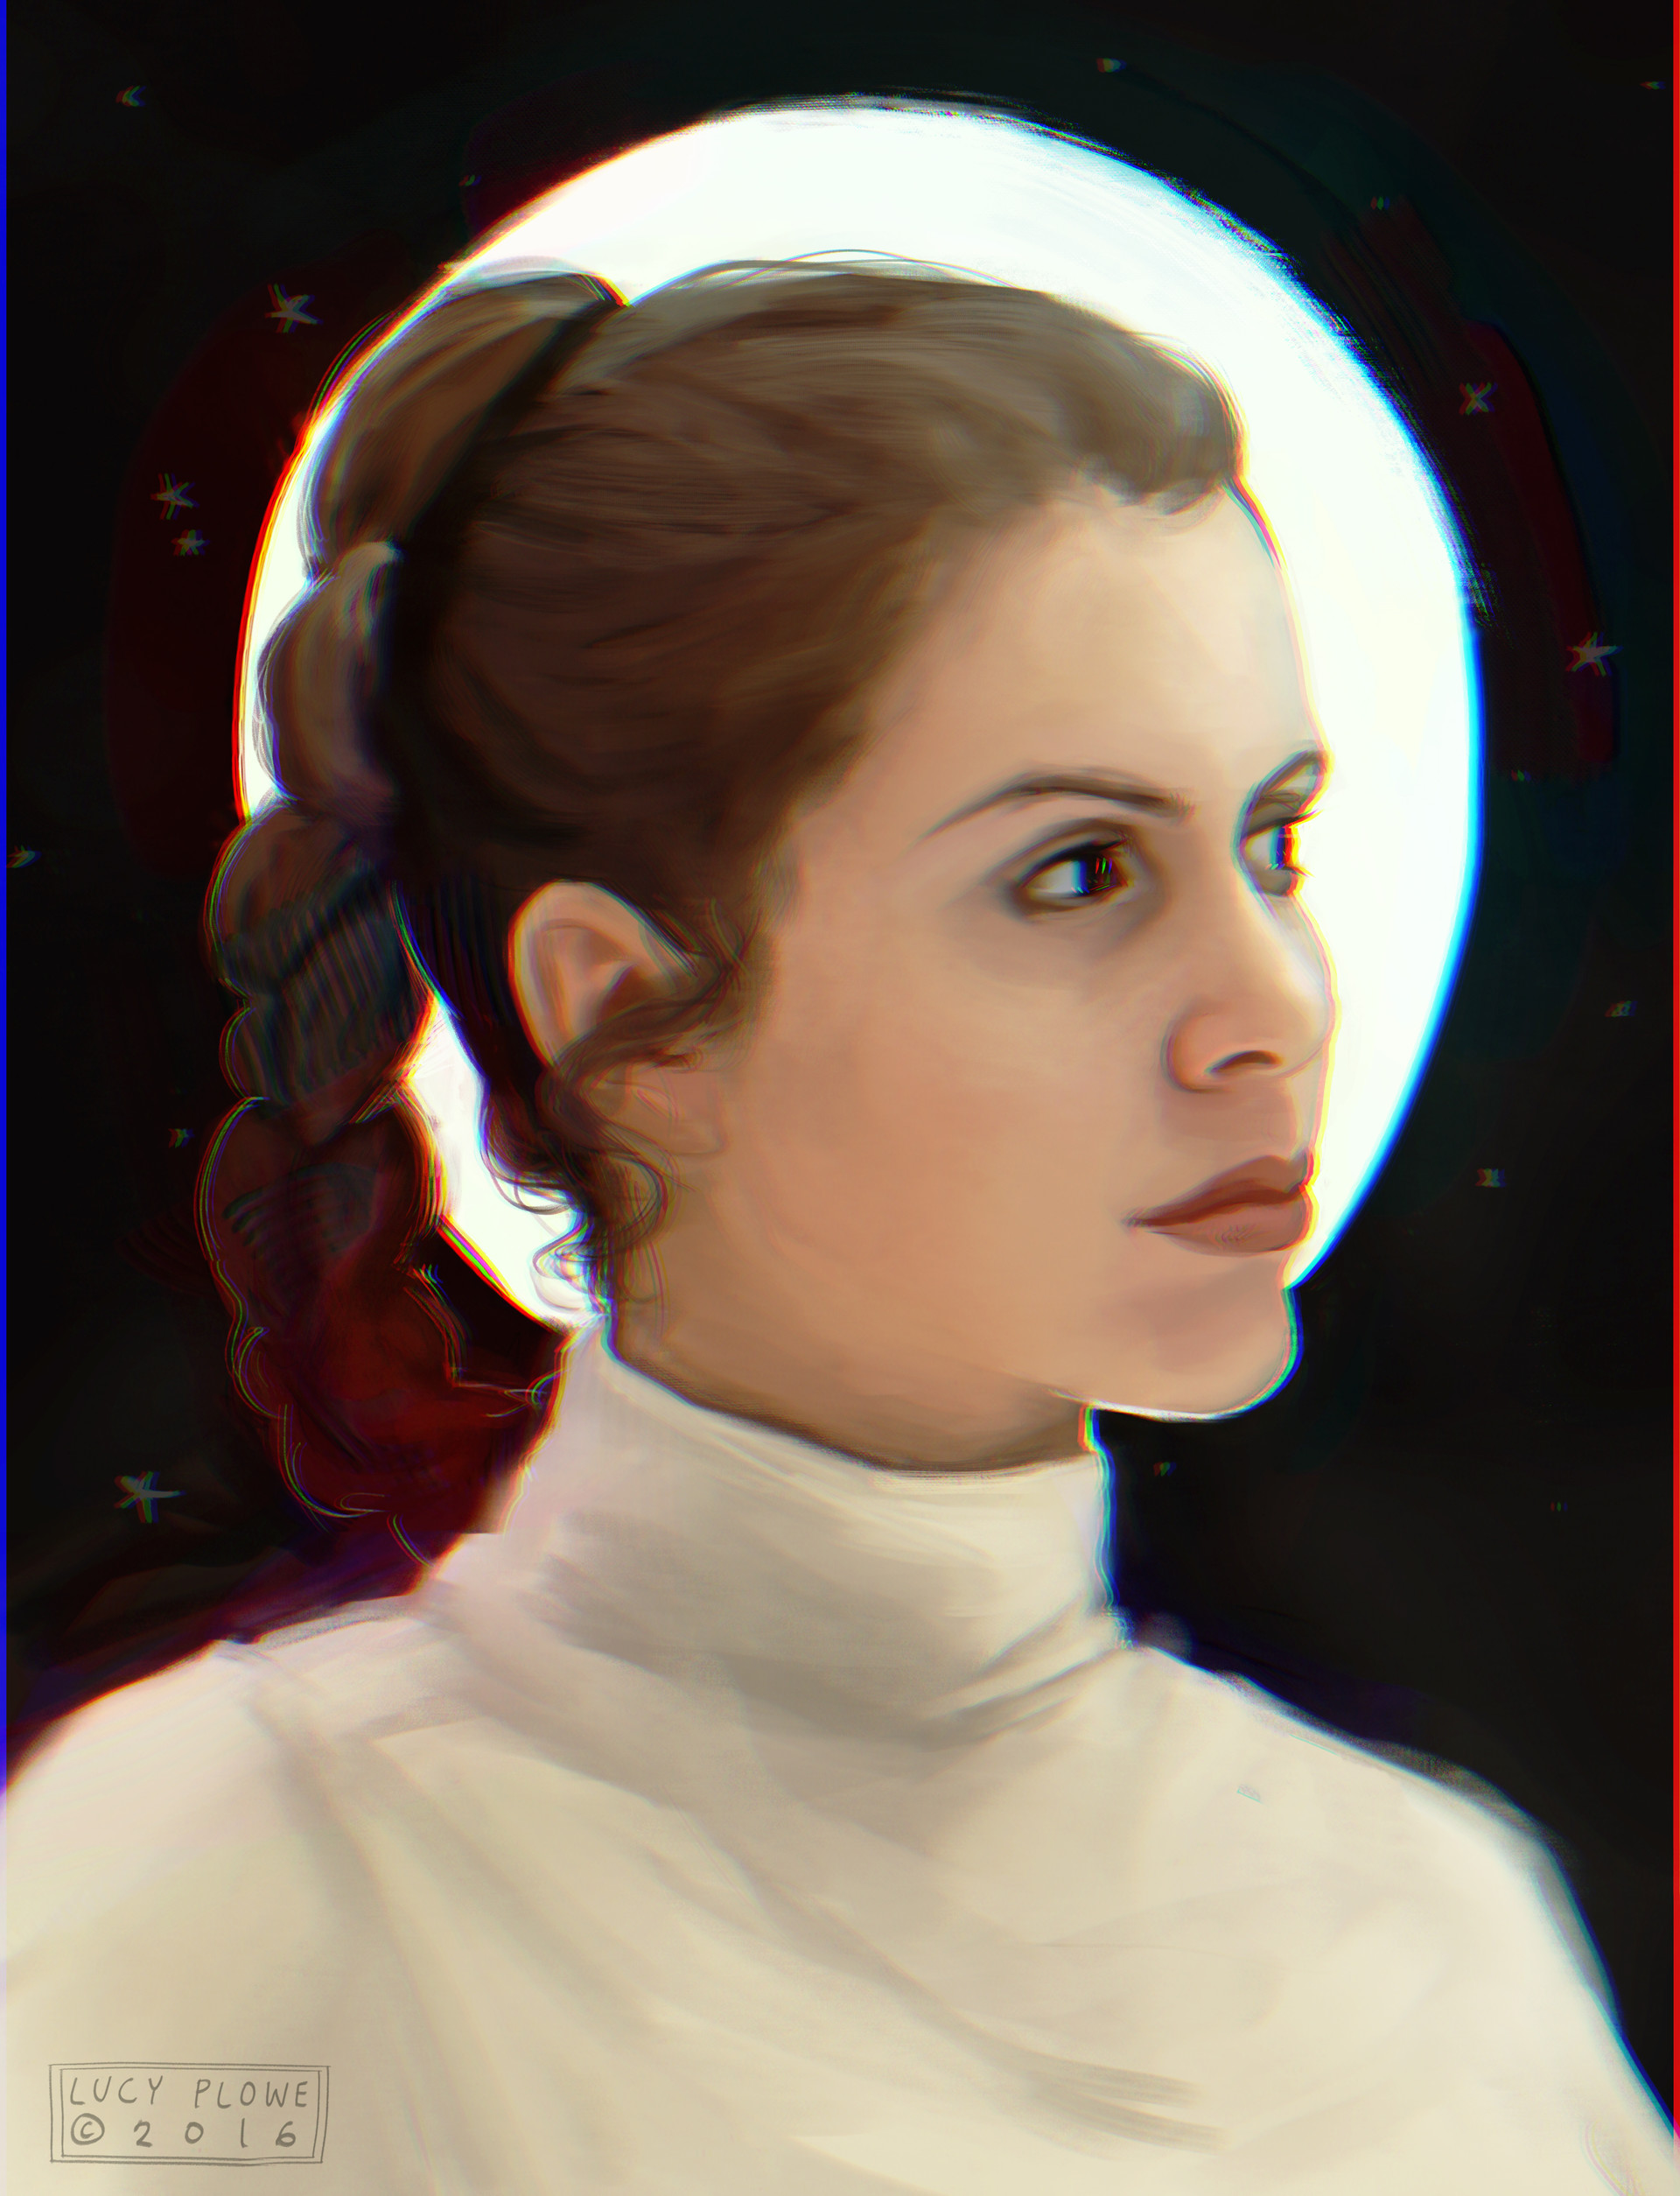 Fan art of Princess Leia.